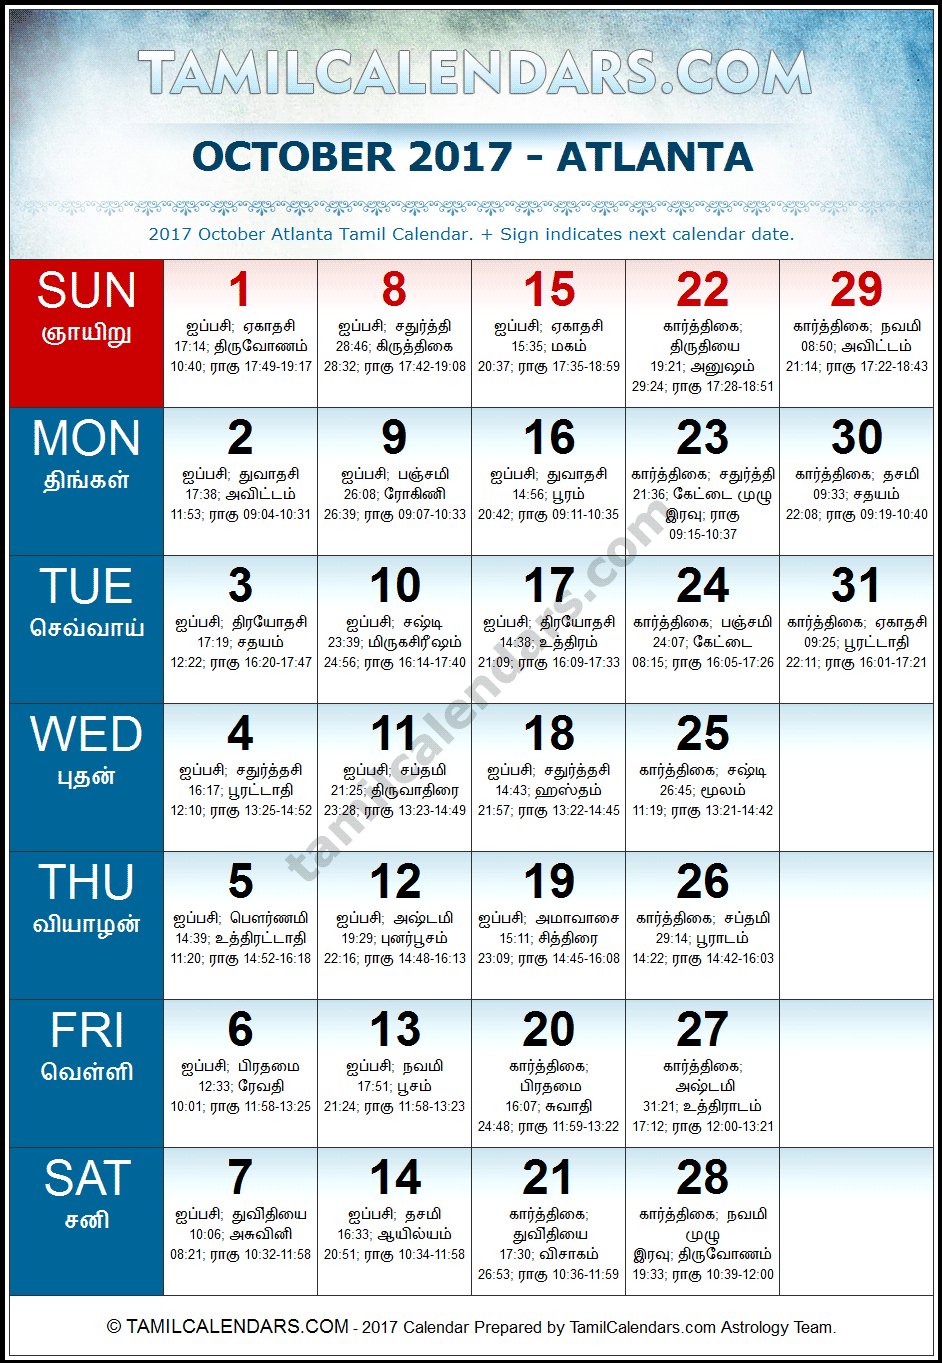 October 2017 Tamil Calendar for Atlanta, USA